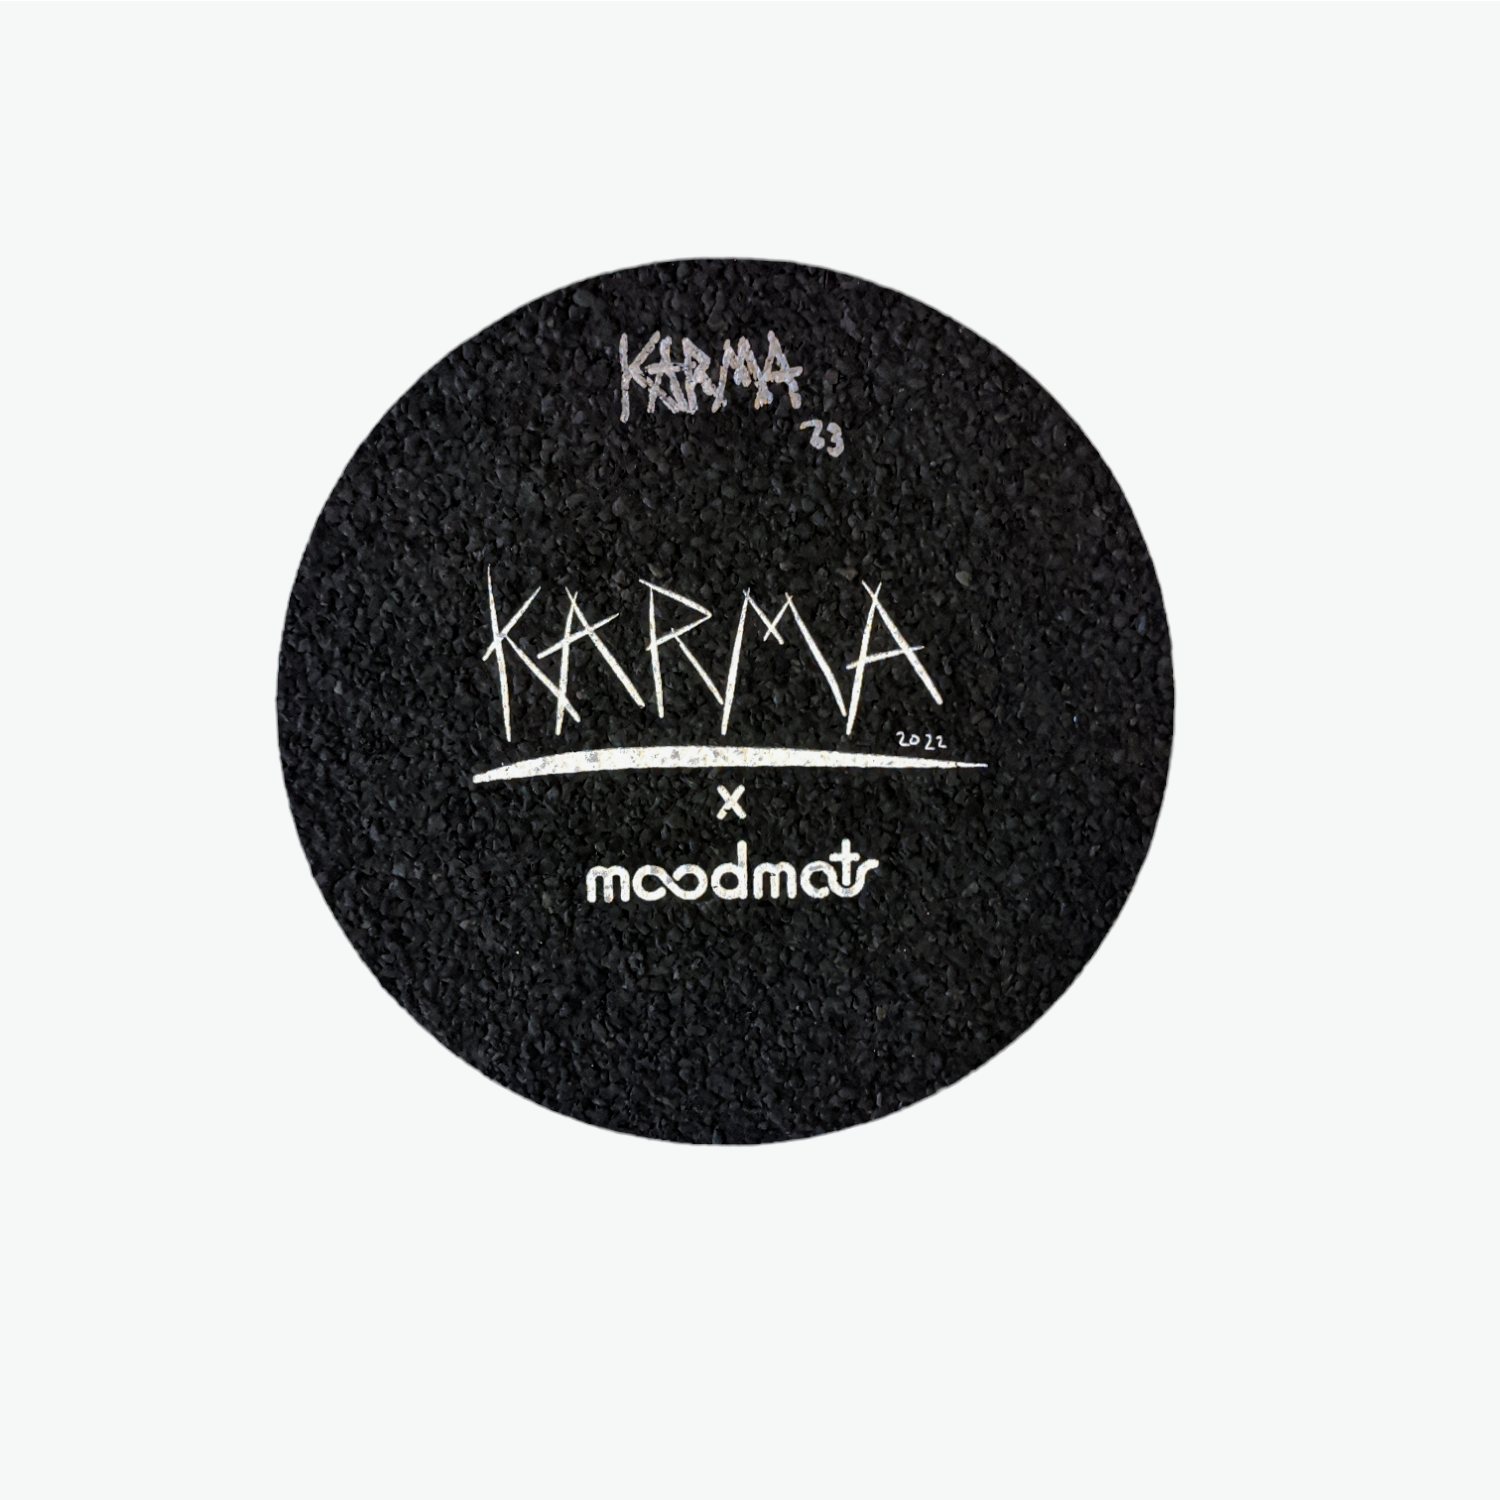 Karma UV Karmacello Yin Yang Screen Print on Moodmat 8 in diameter  Hand signed by the artist